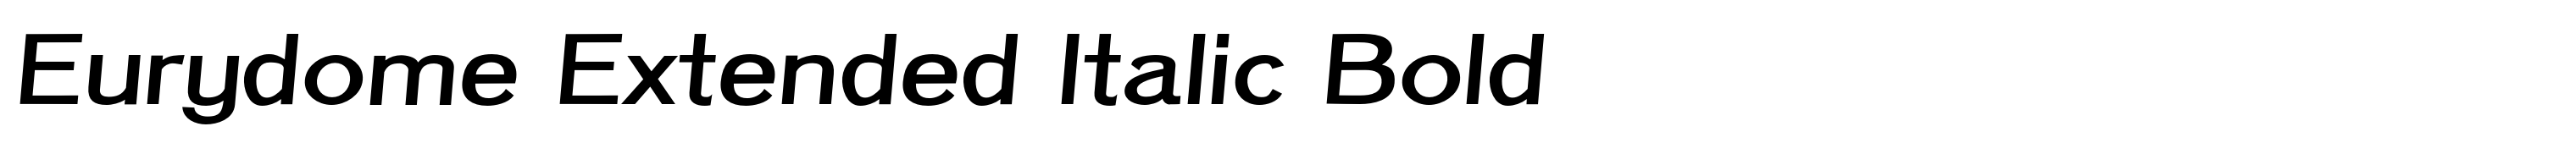 Eurydome Extended Italic Bold